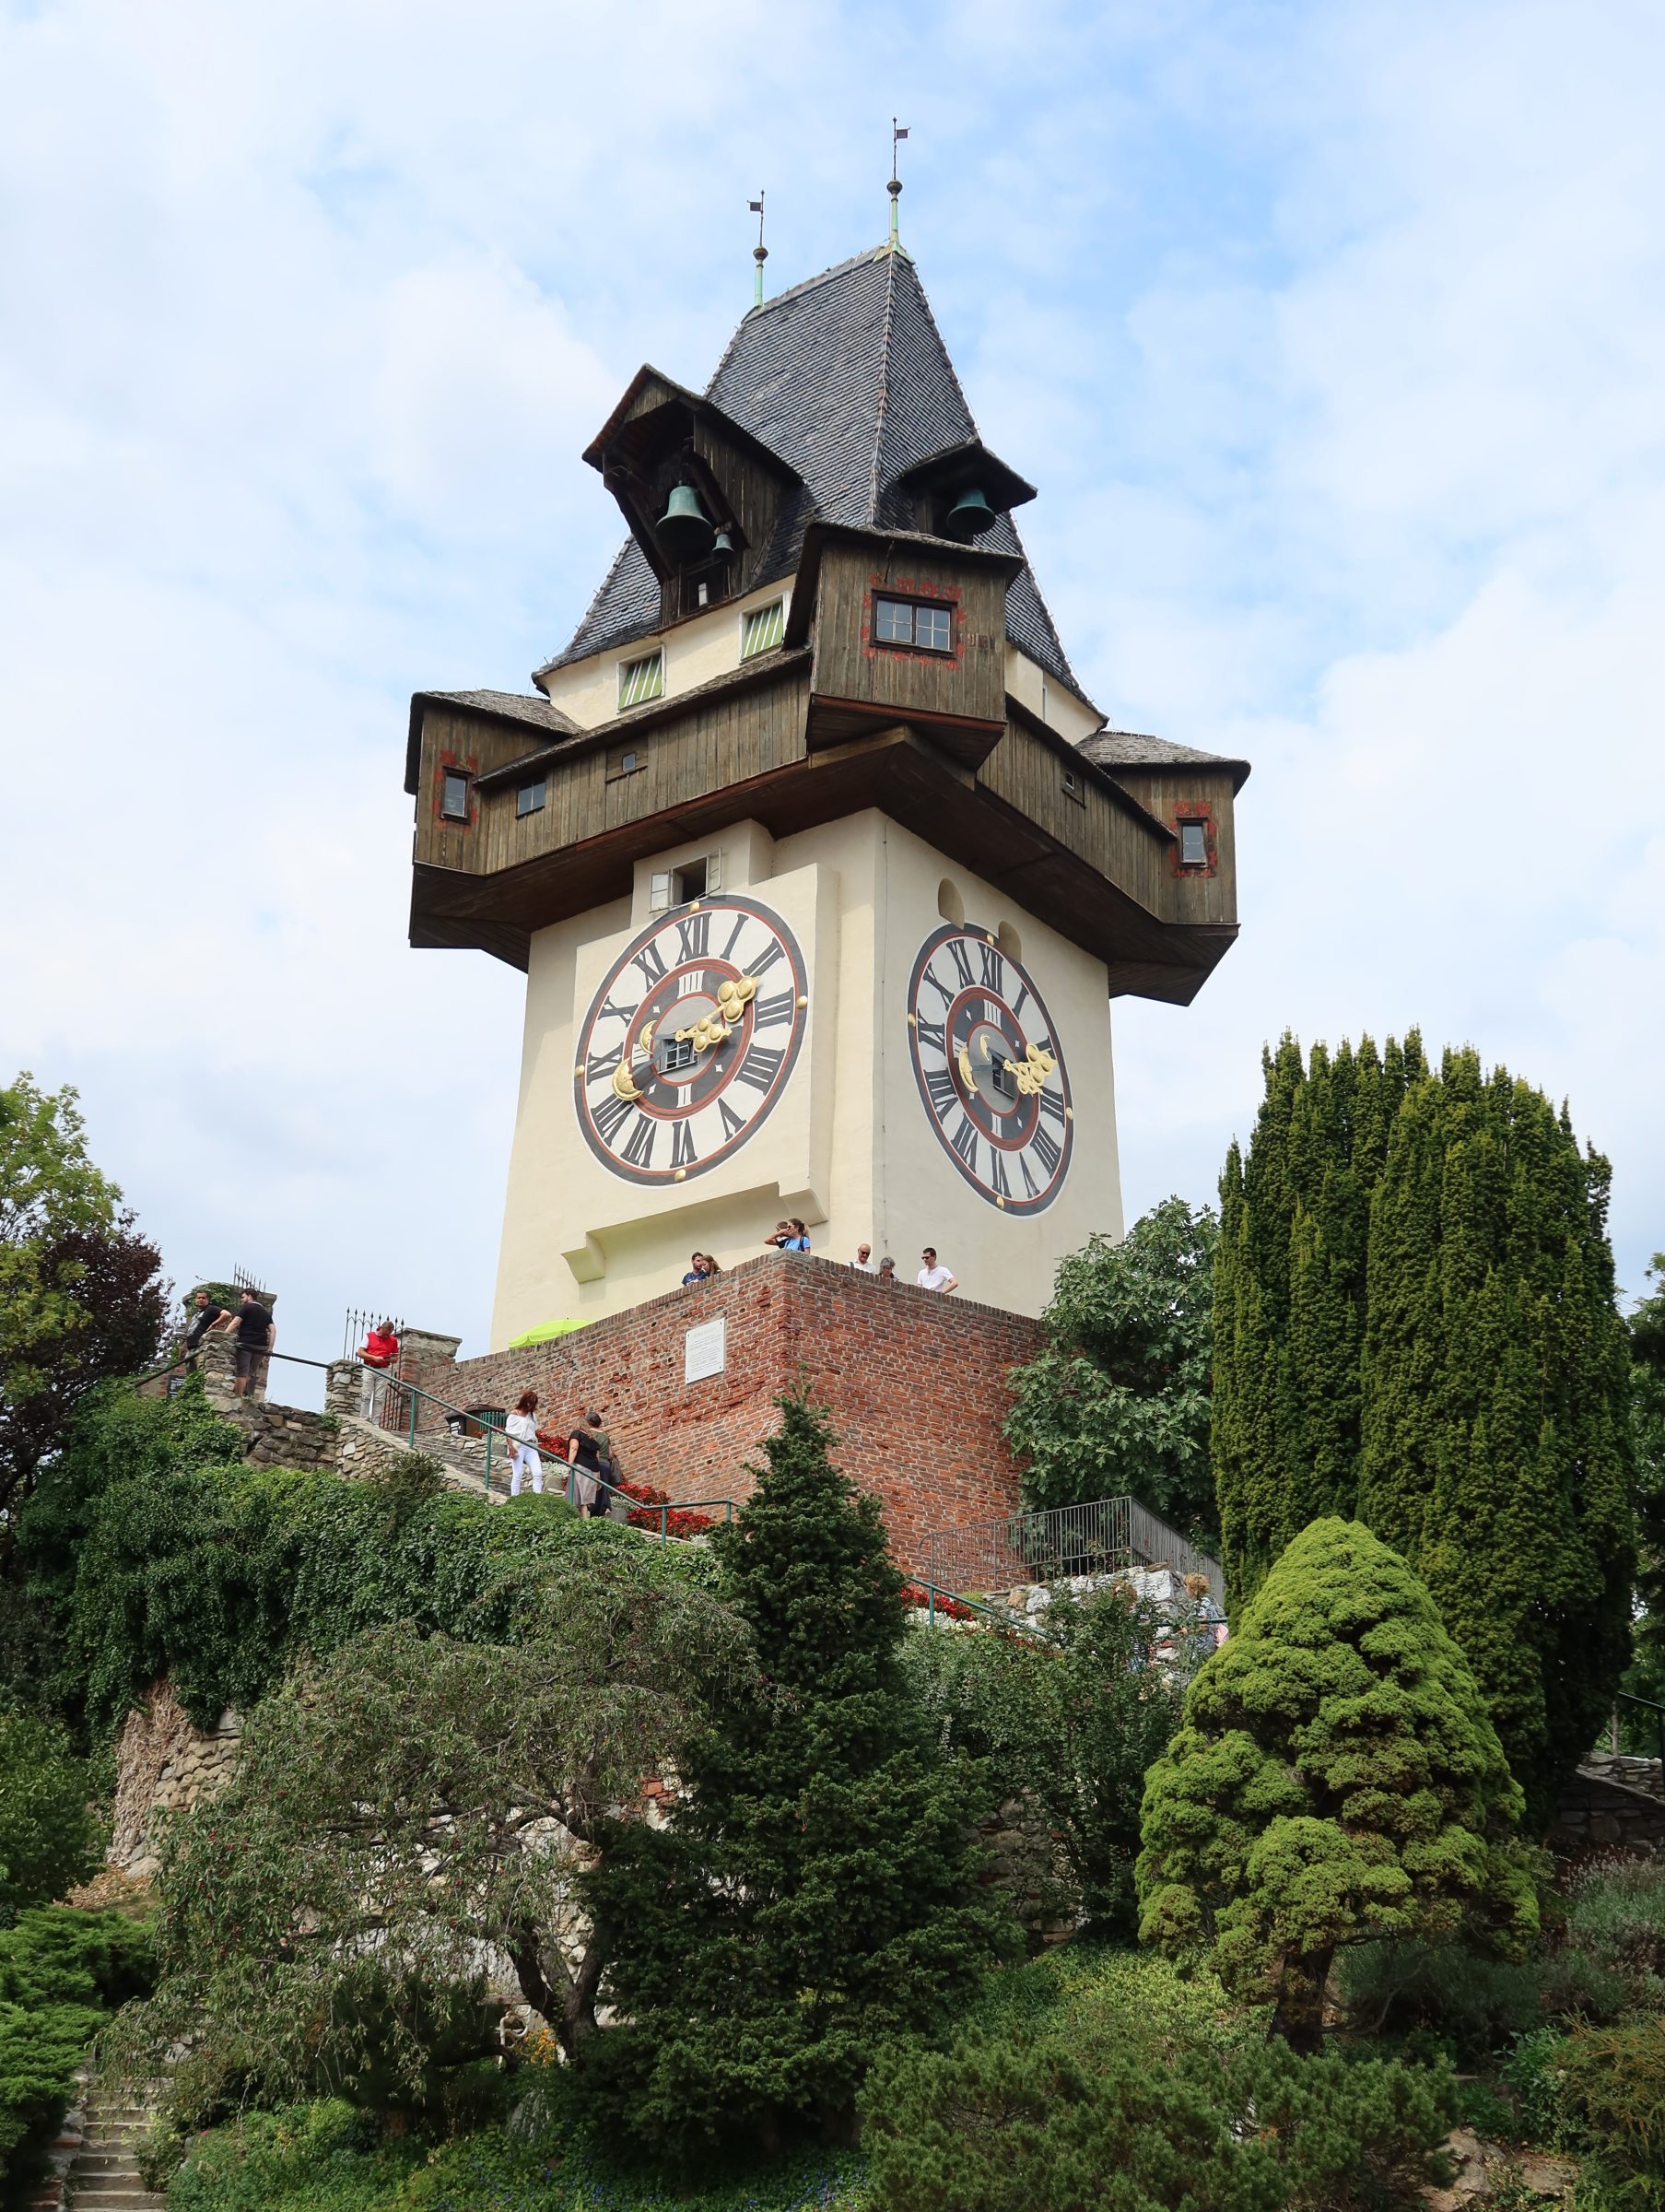 La torre del reloj el 'Grazer Uhrturm'